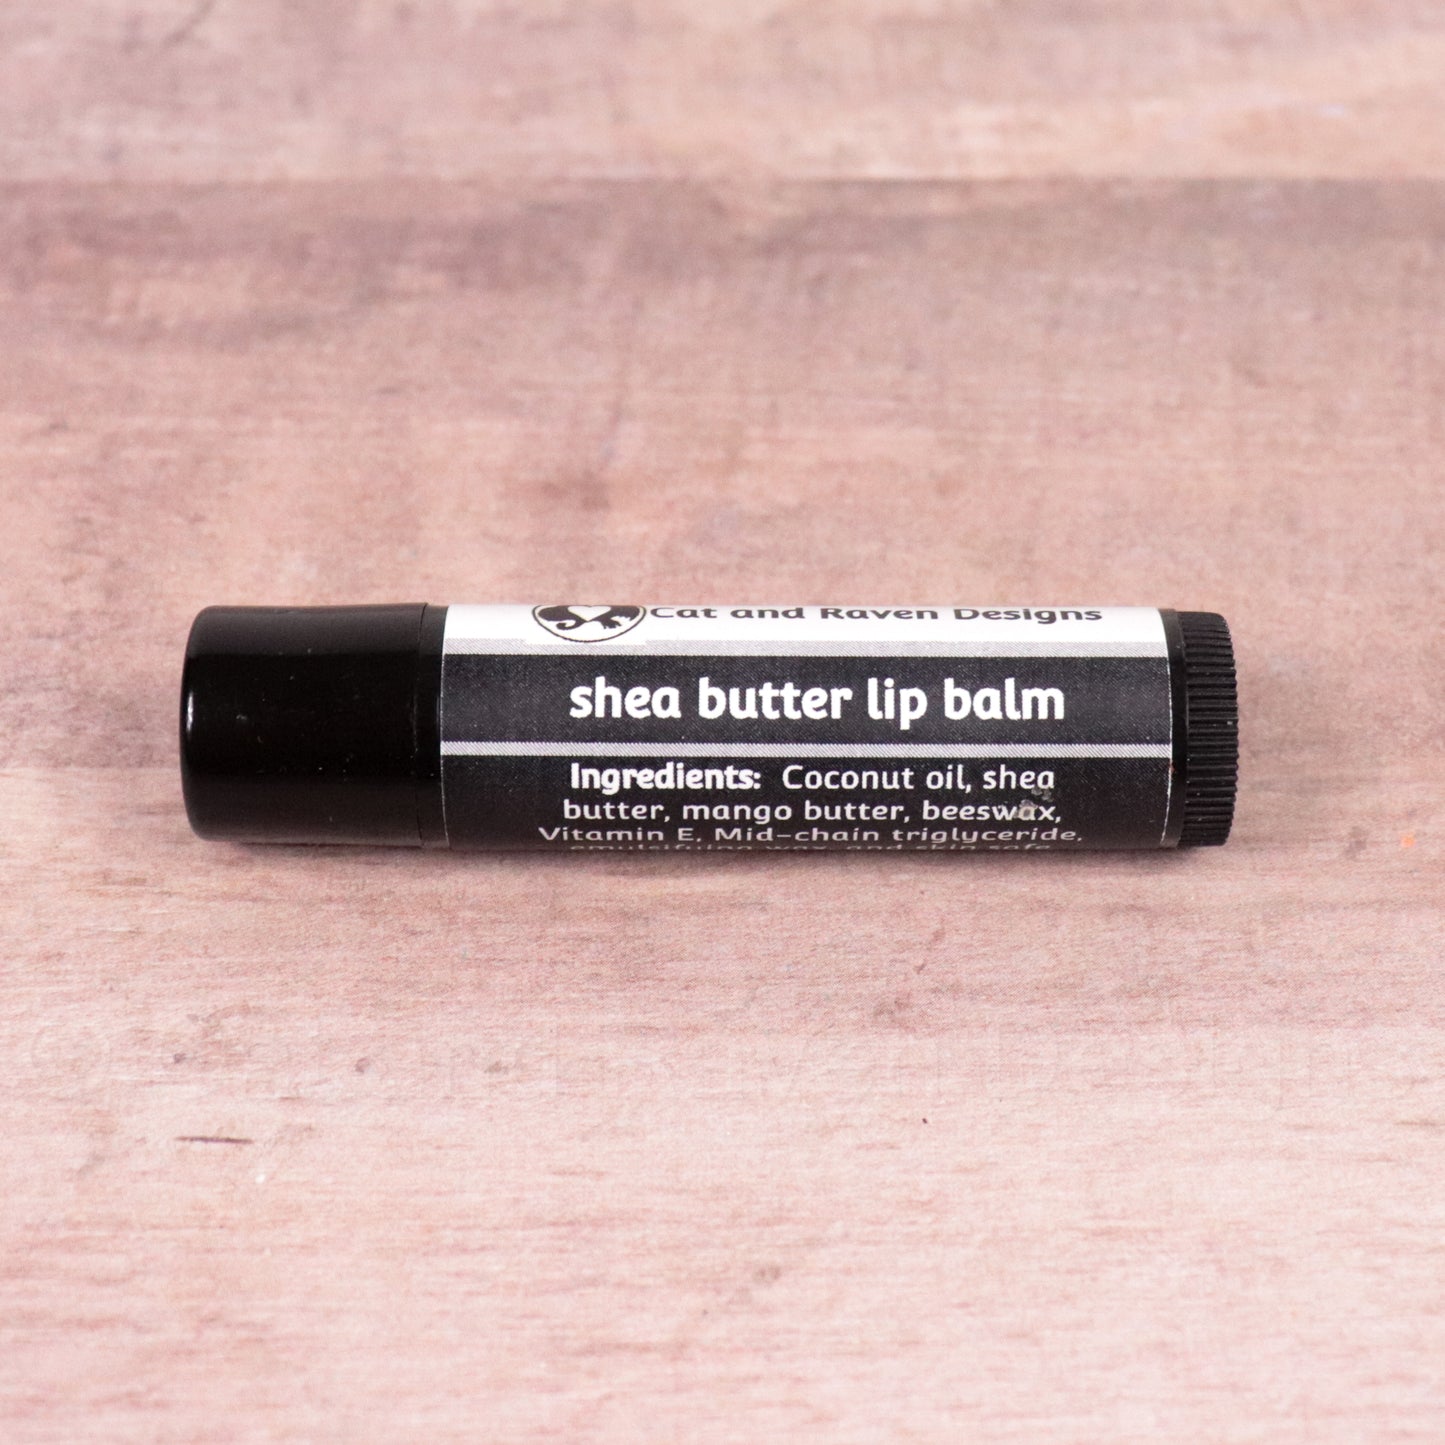 Shea butter lip balms